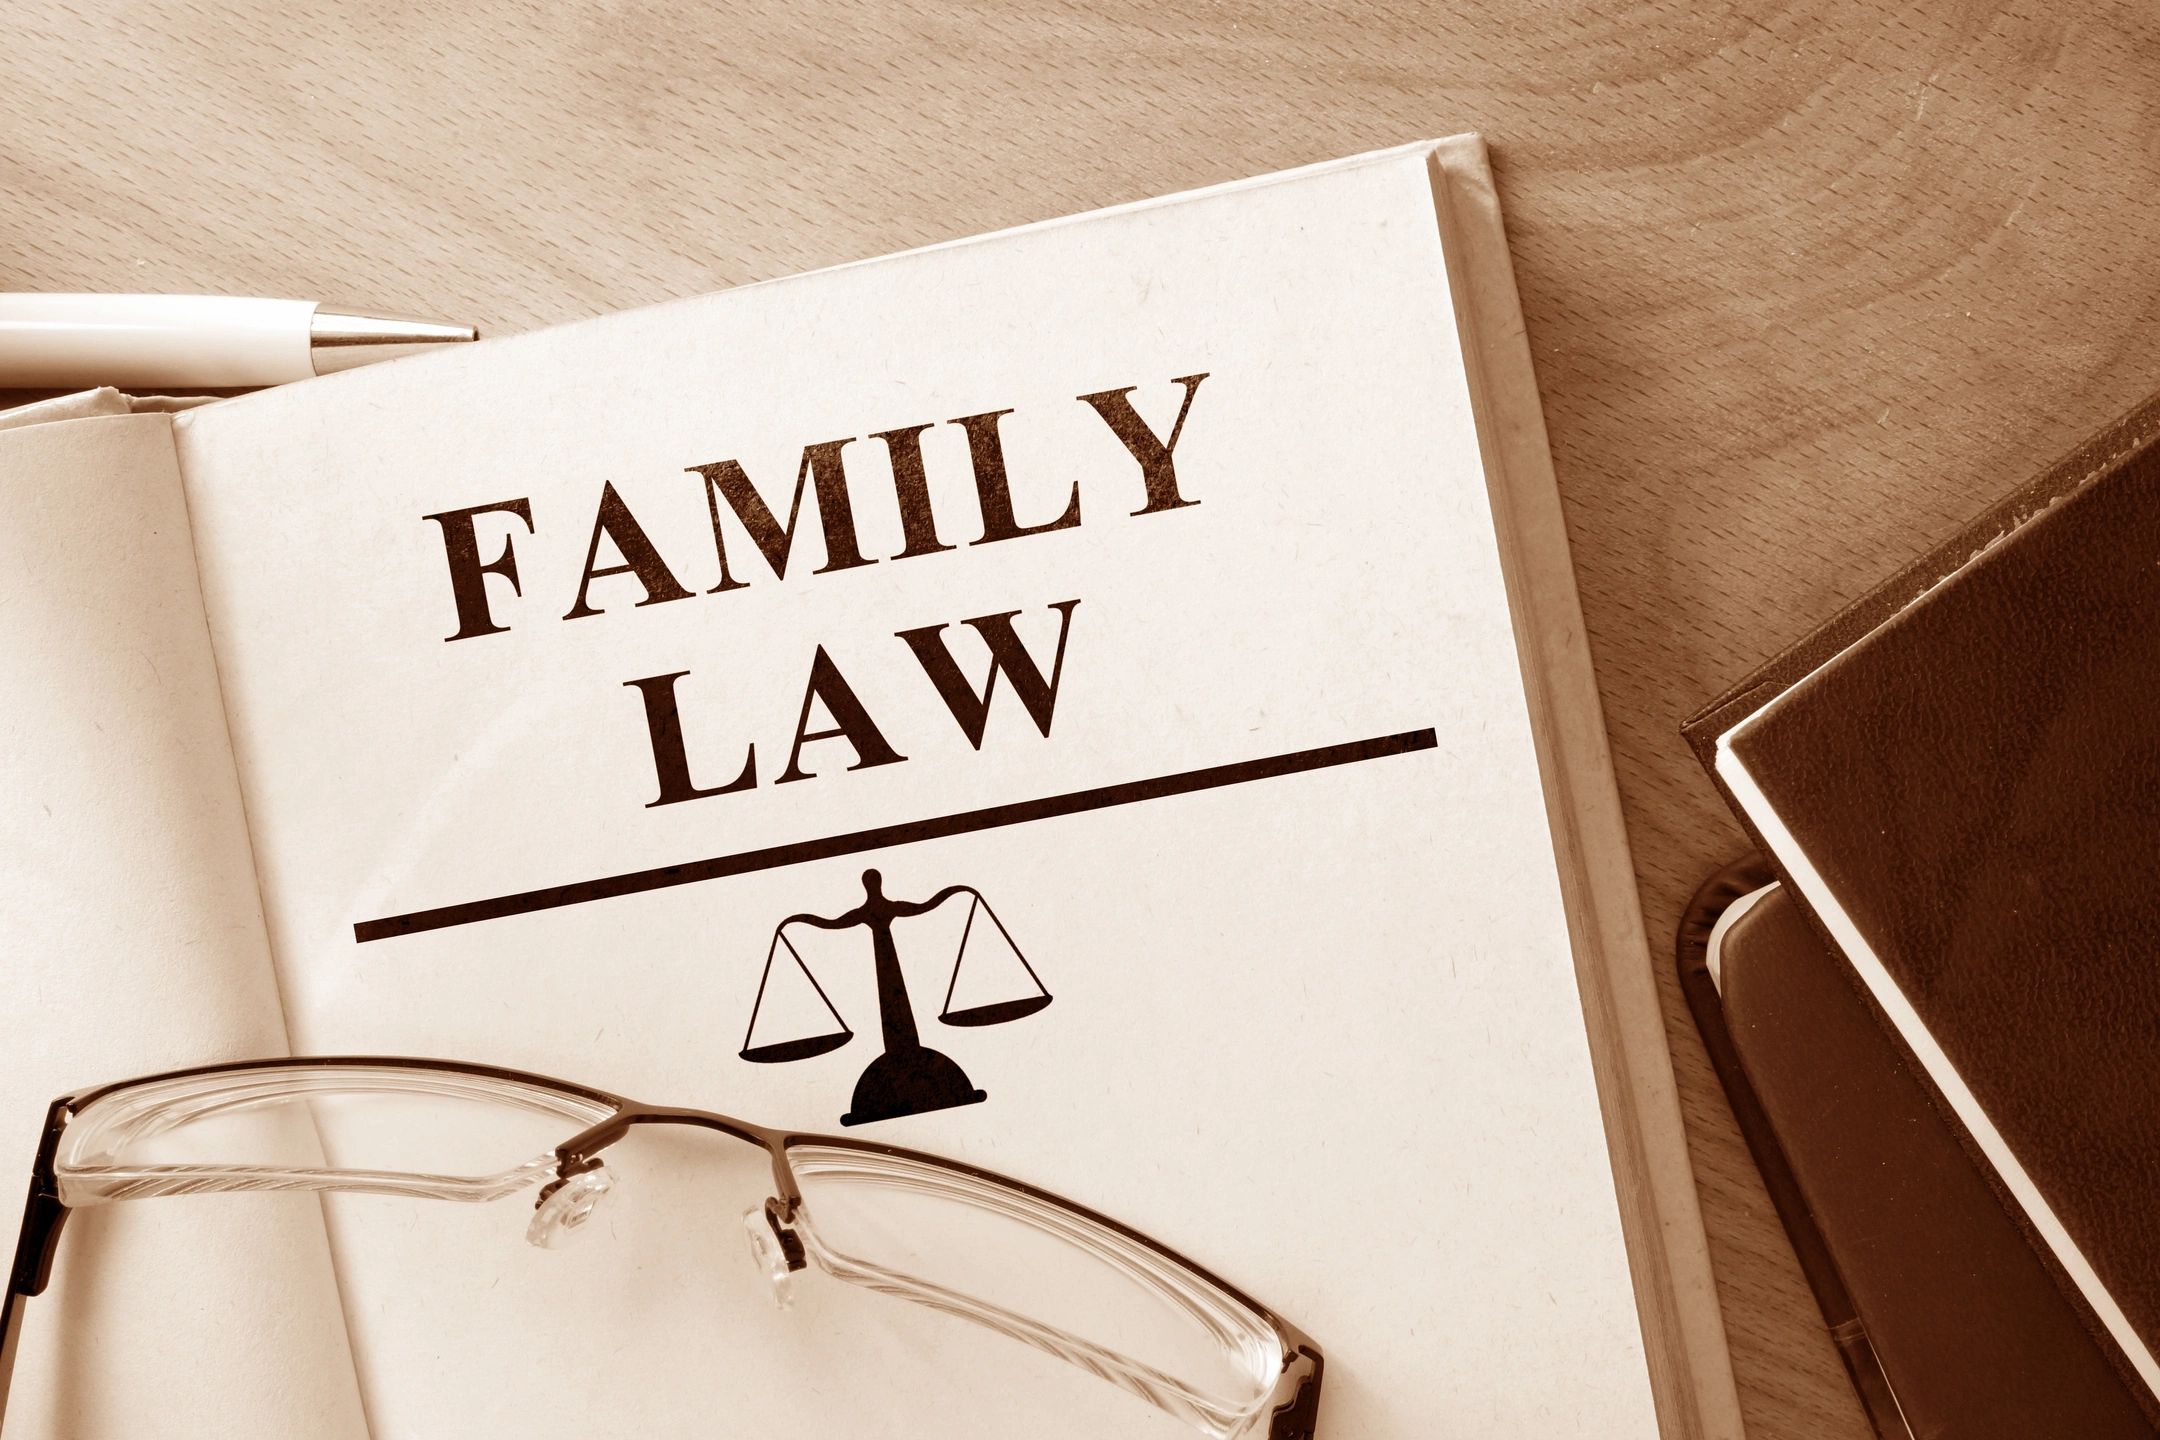 Family law attorney lawyer